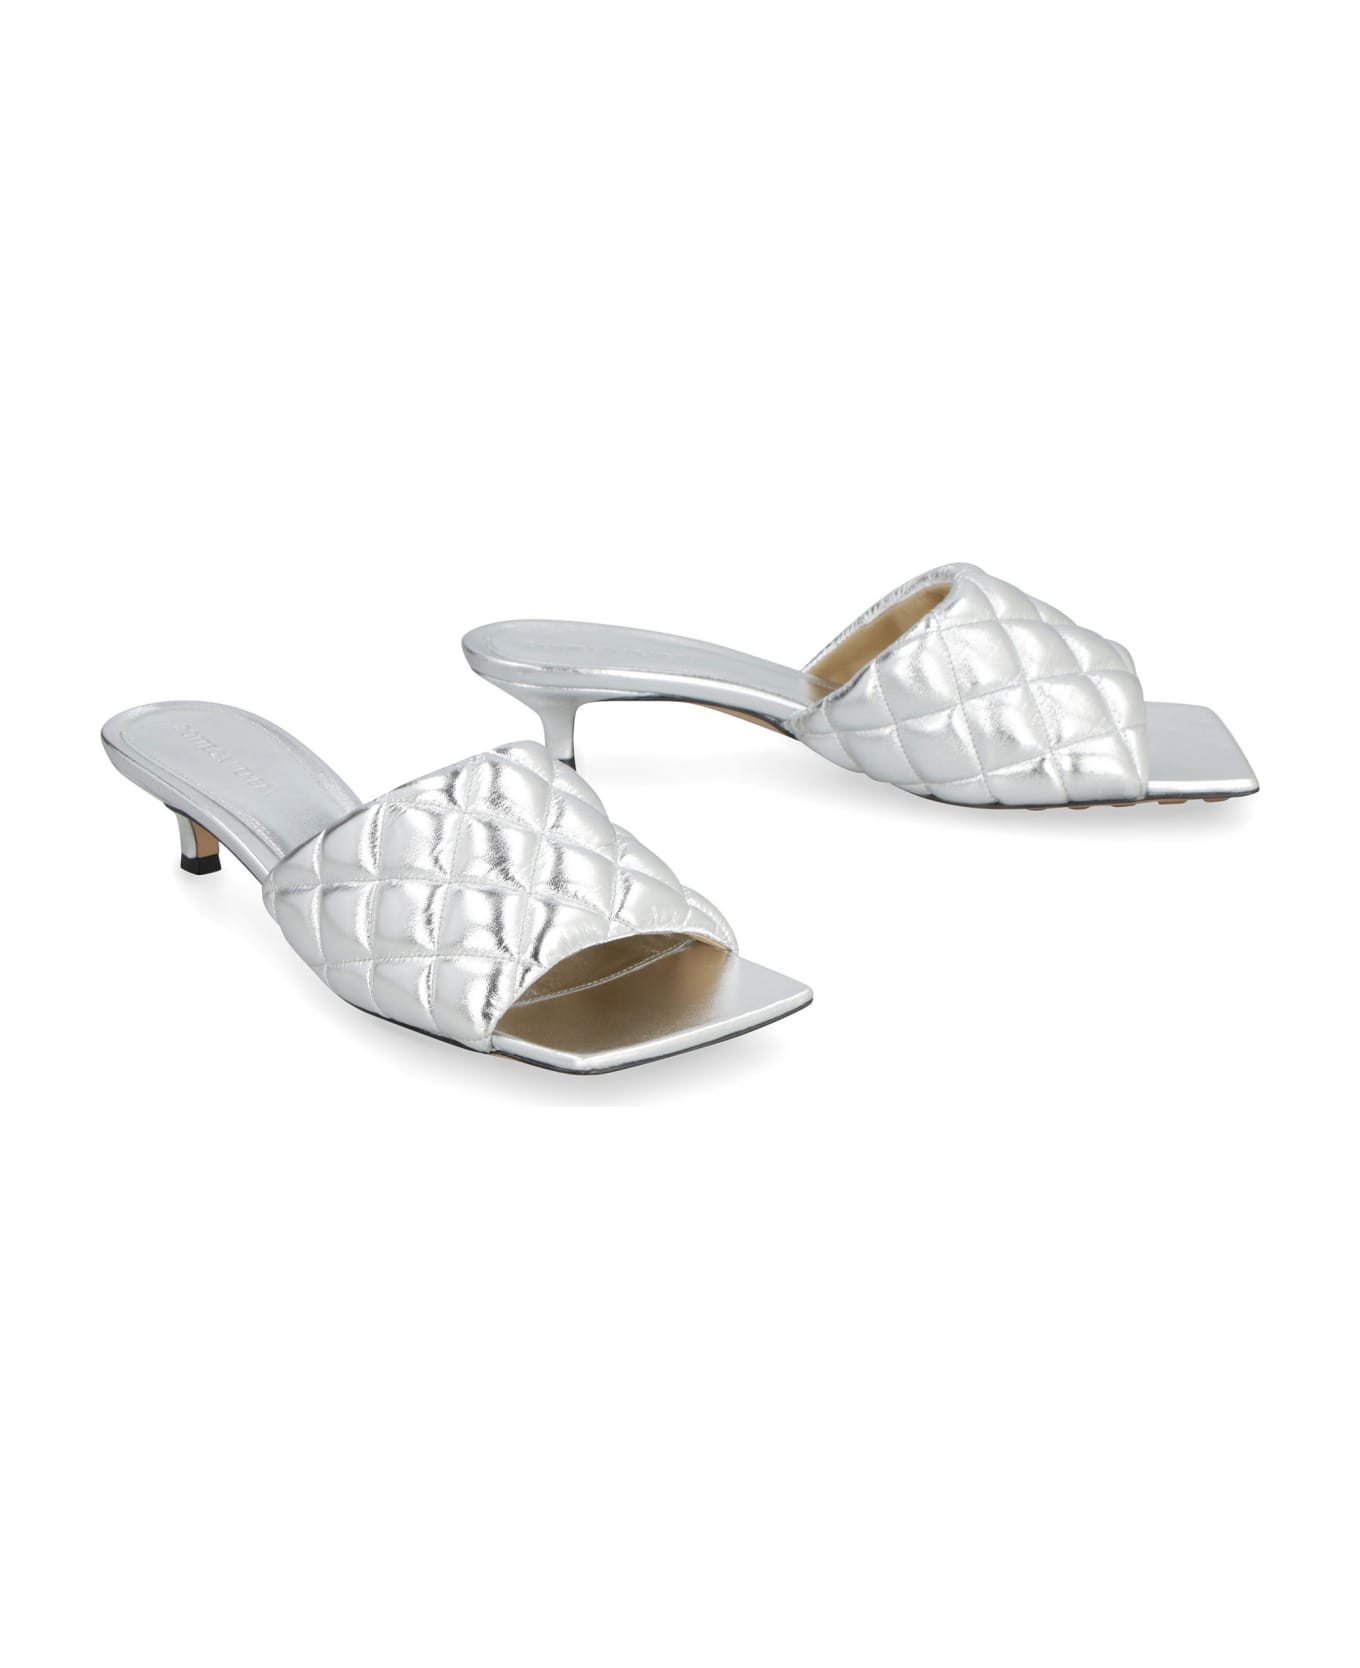 Bottega Veneta Padded Leather Sandals - silver